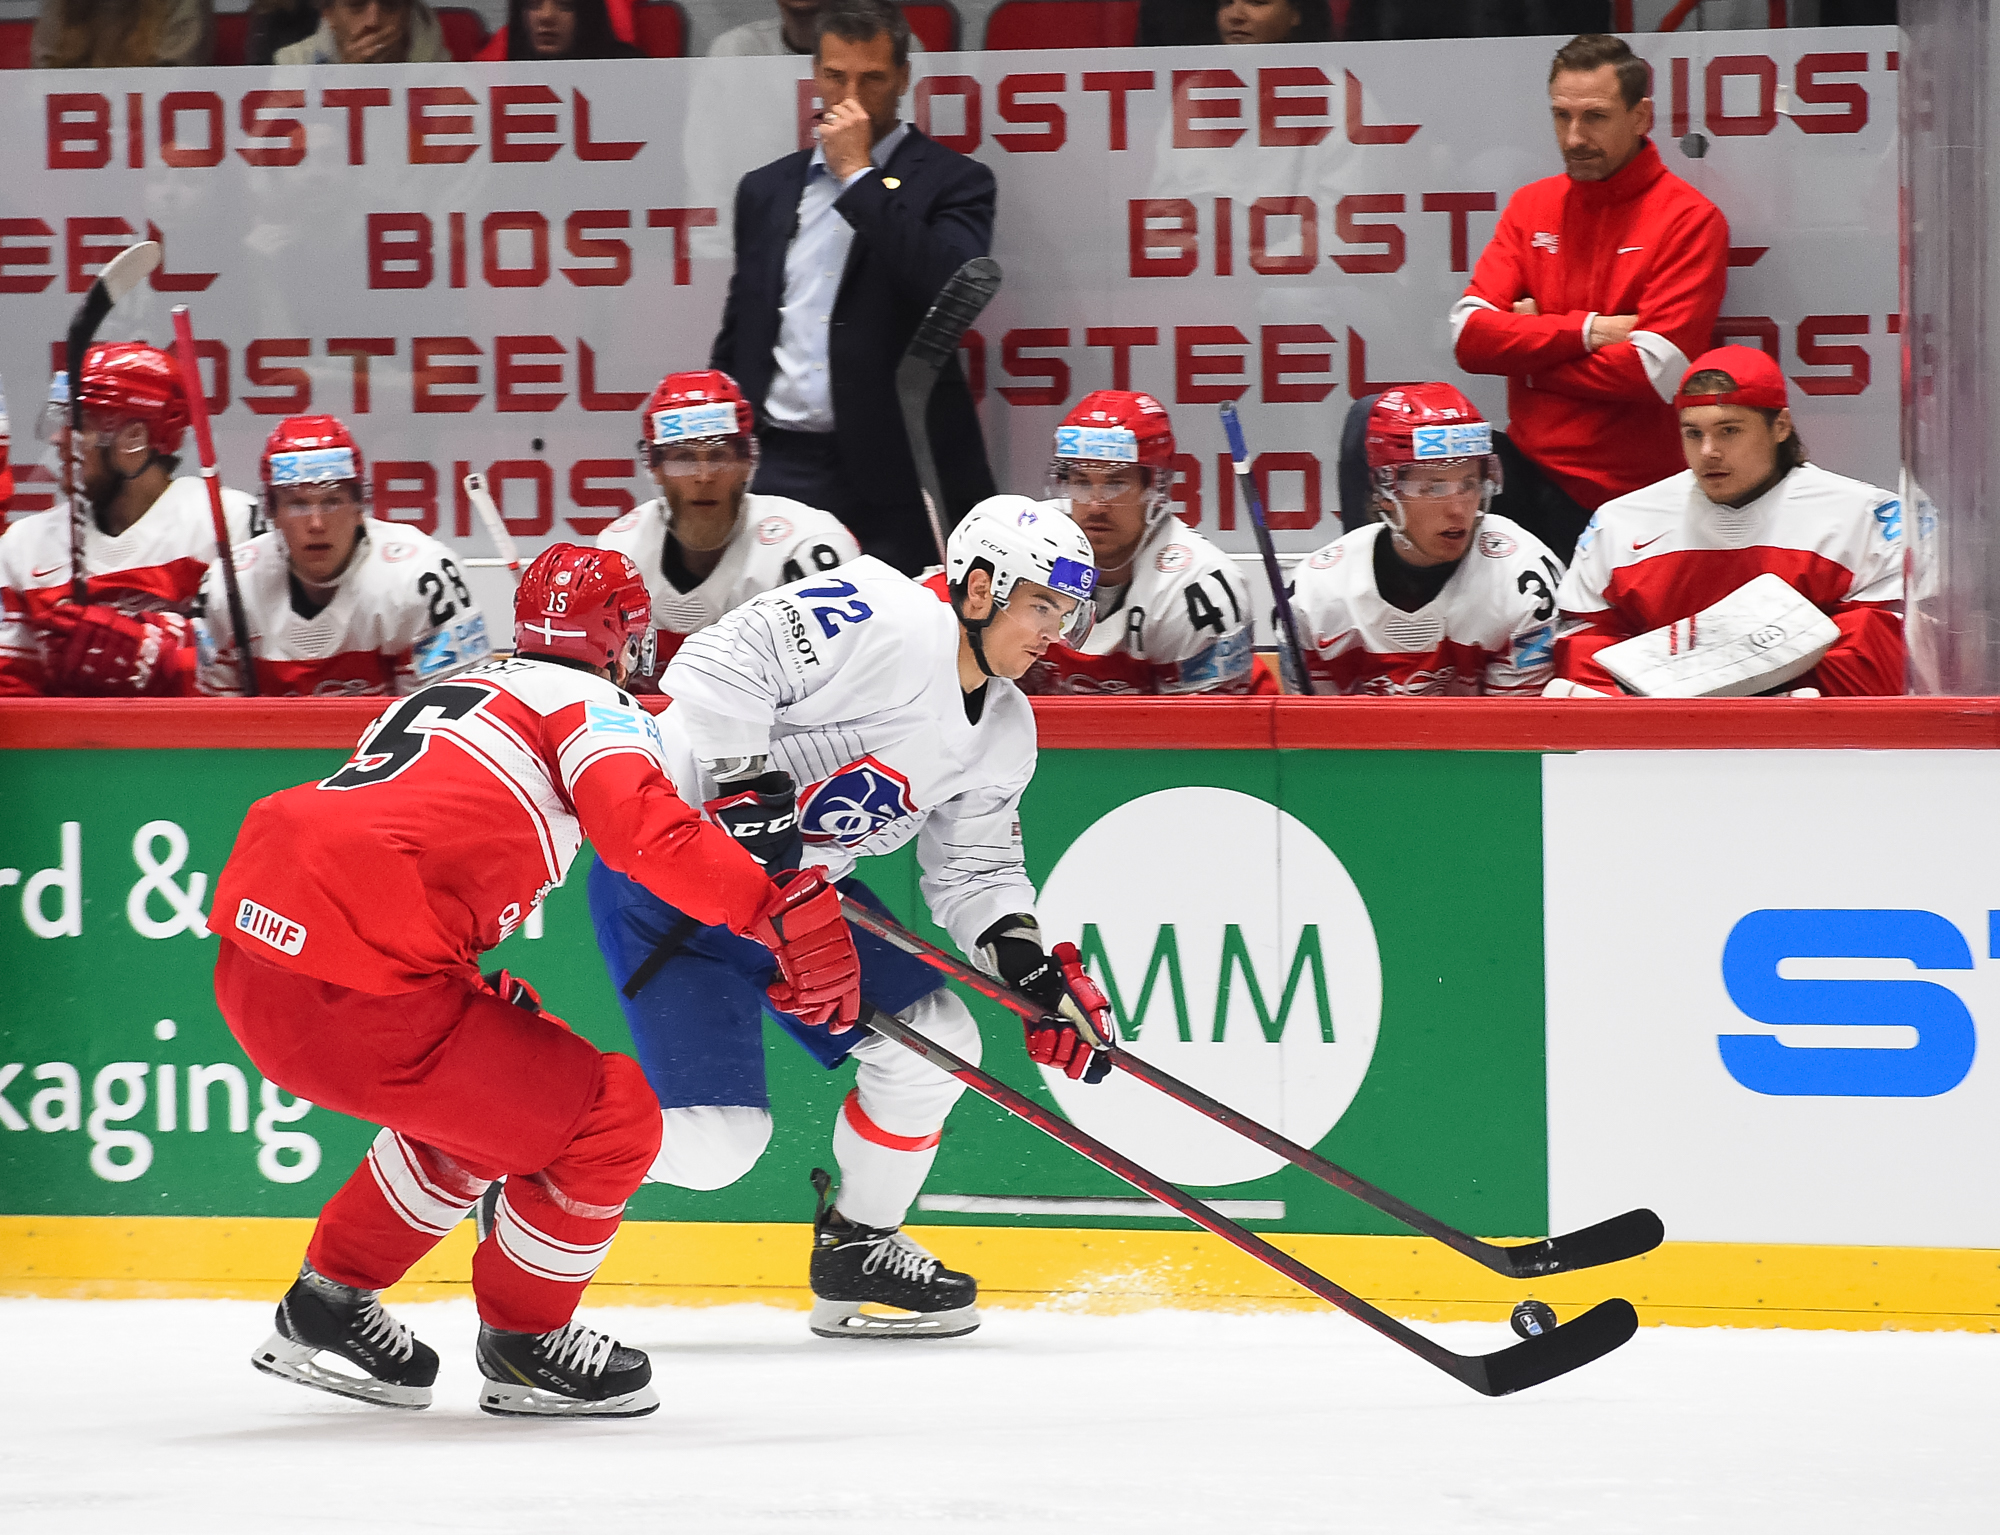 IIHF - Gallery Denmark vs France